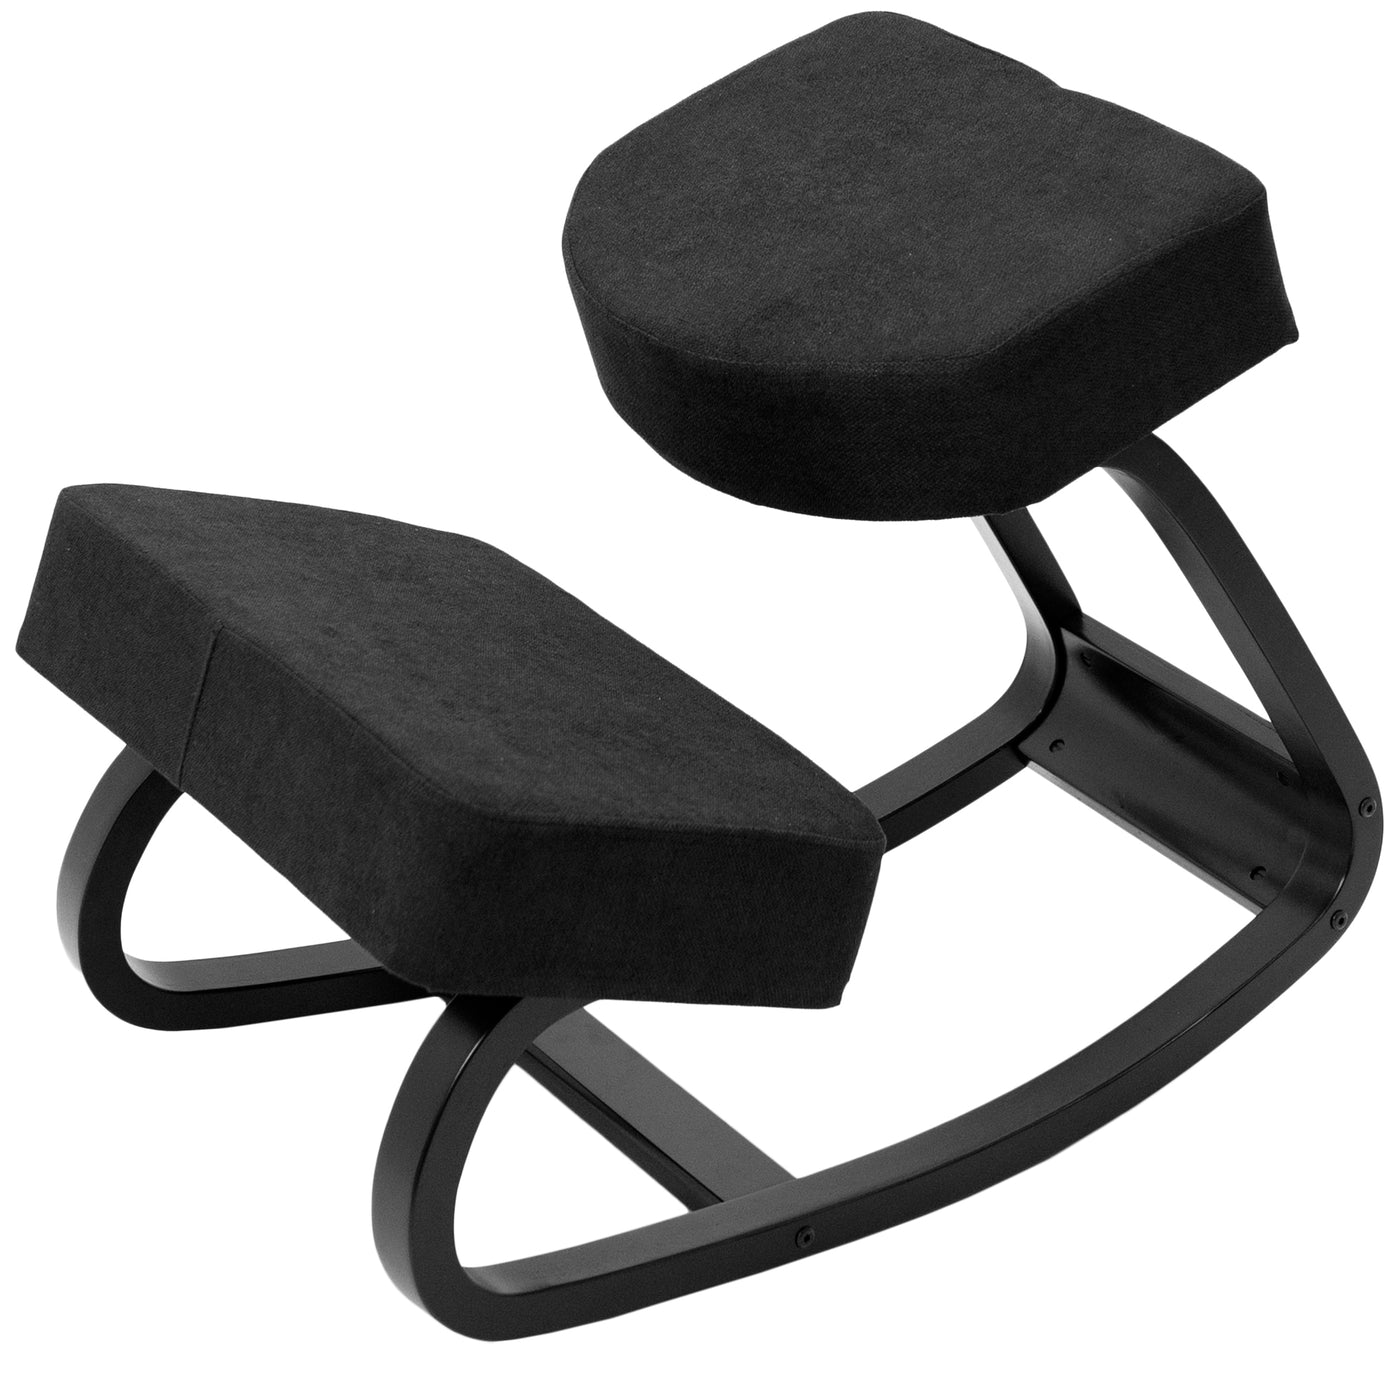 Rocking all-black kneeling chair.